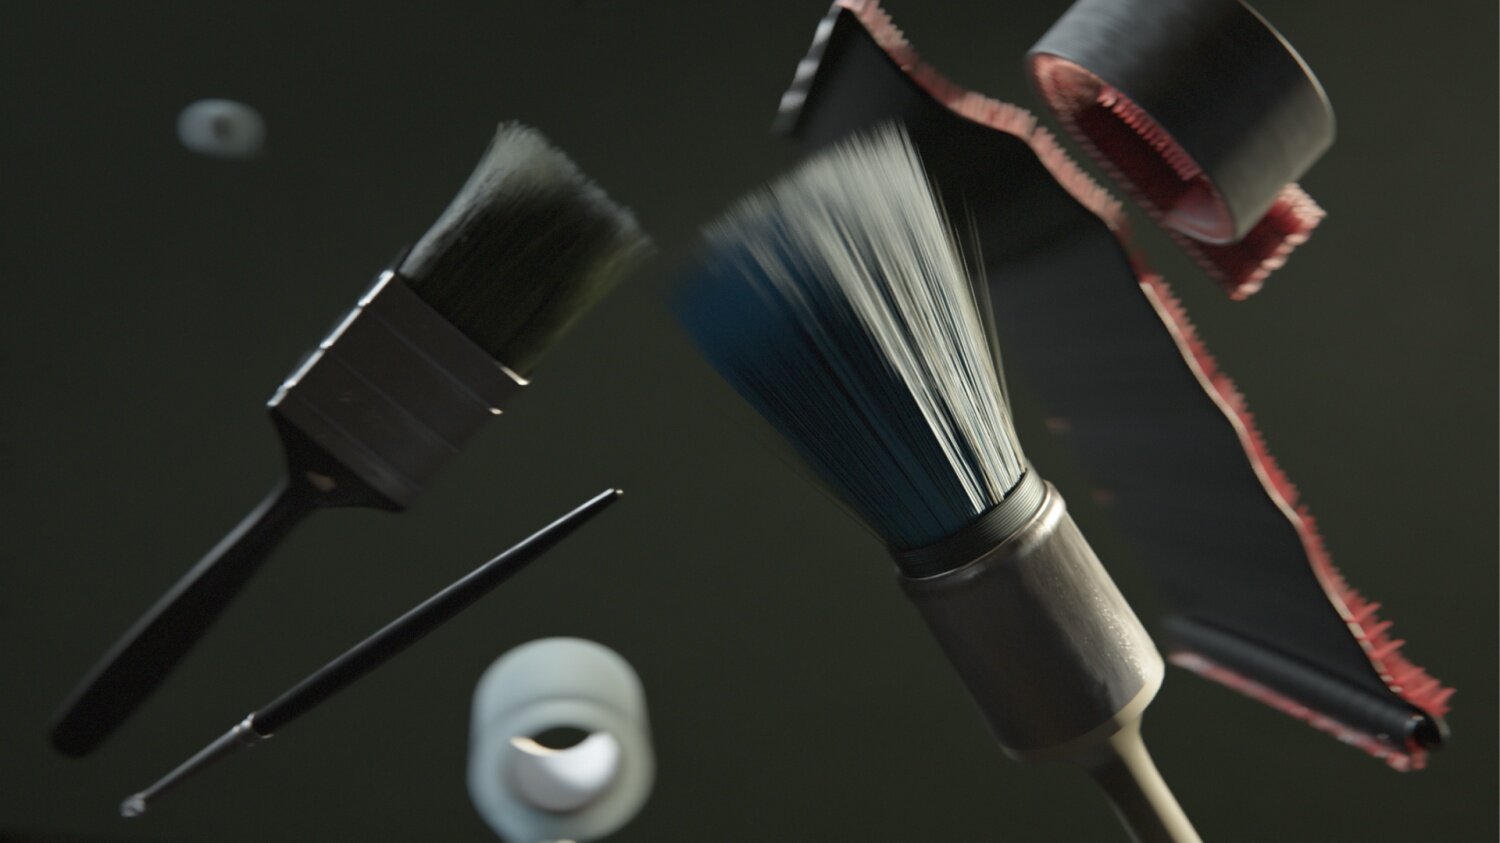 The-Dink-Visual-Atelier-8-Brushes-6.jpg